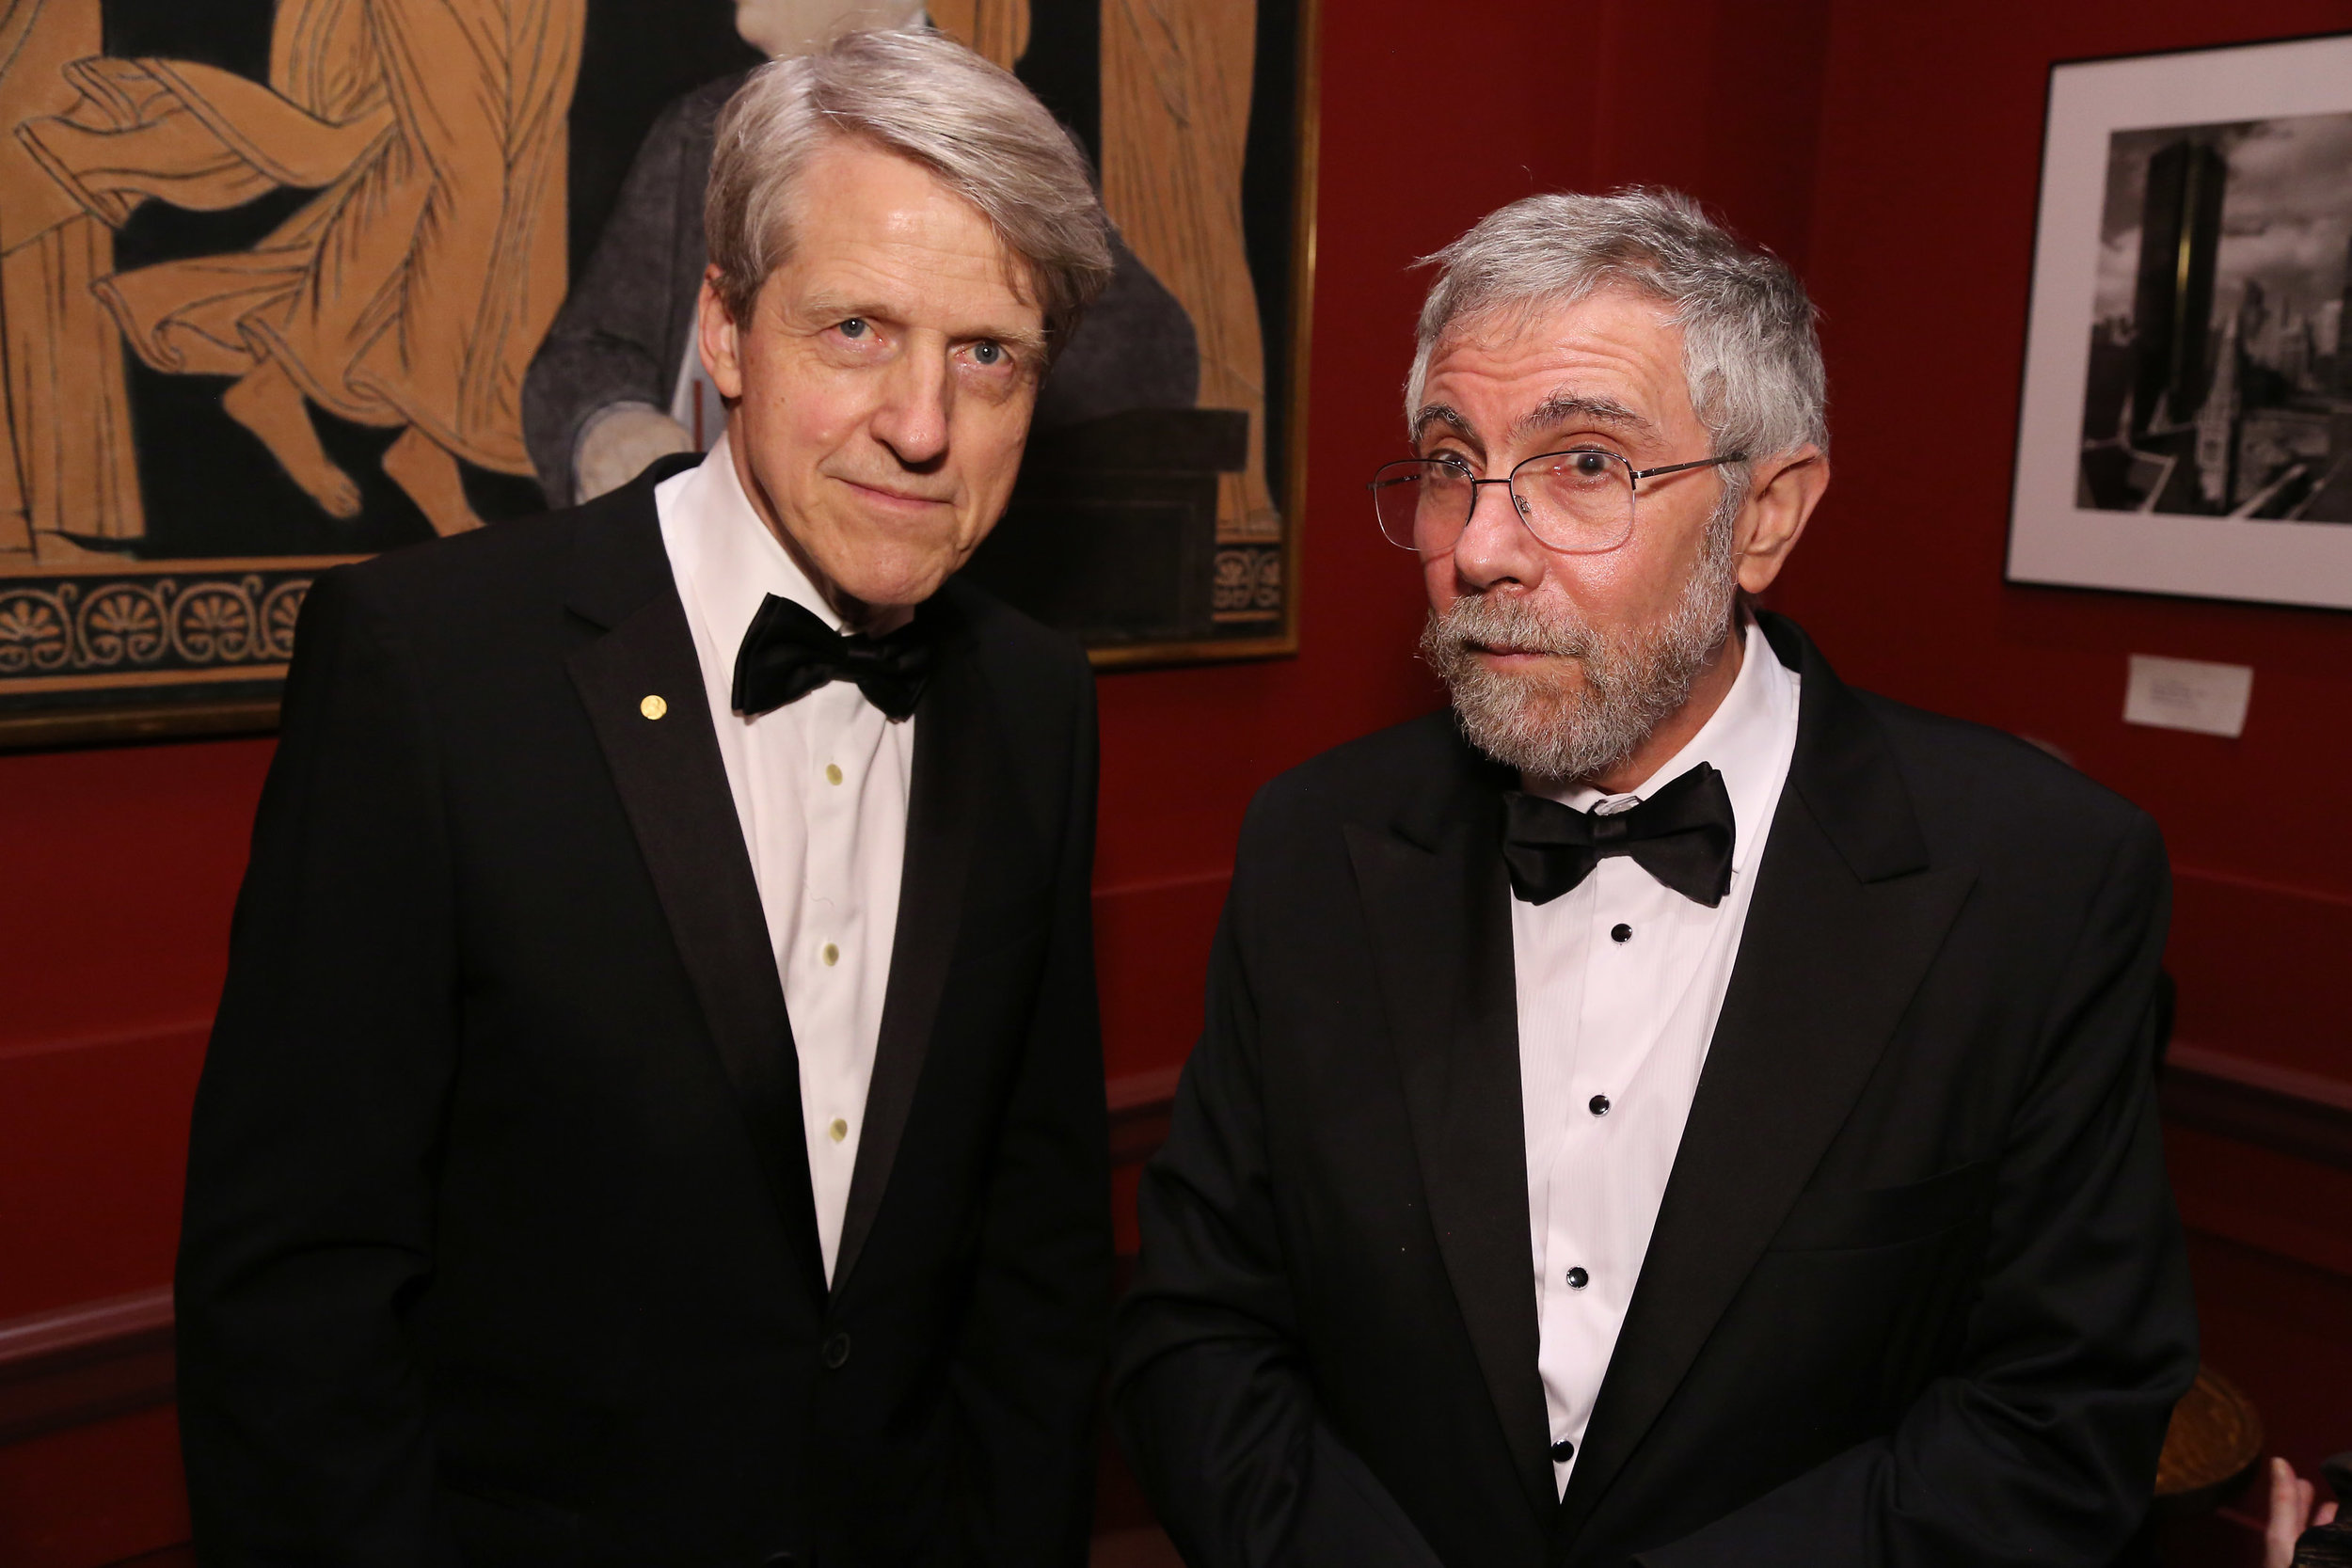  Robert Shiller and Paul Krugman 